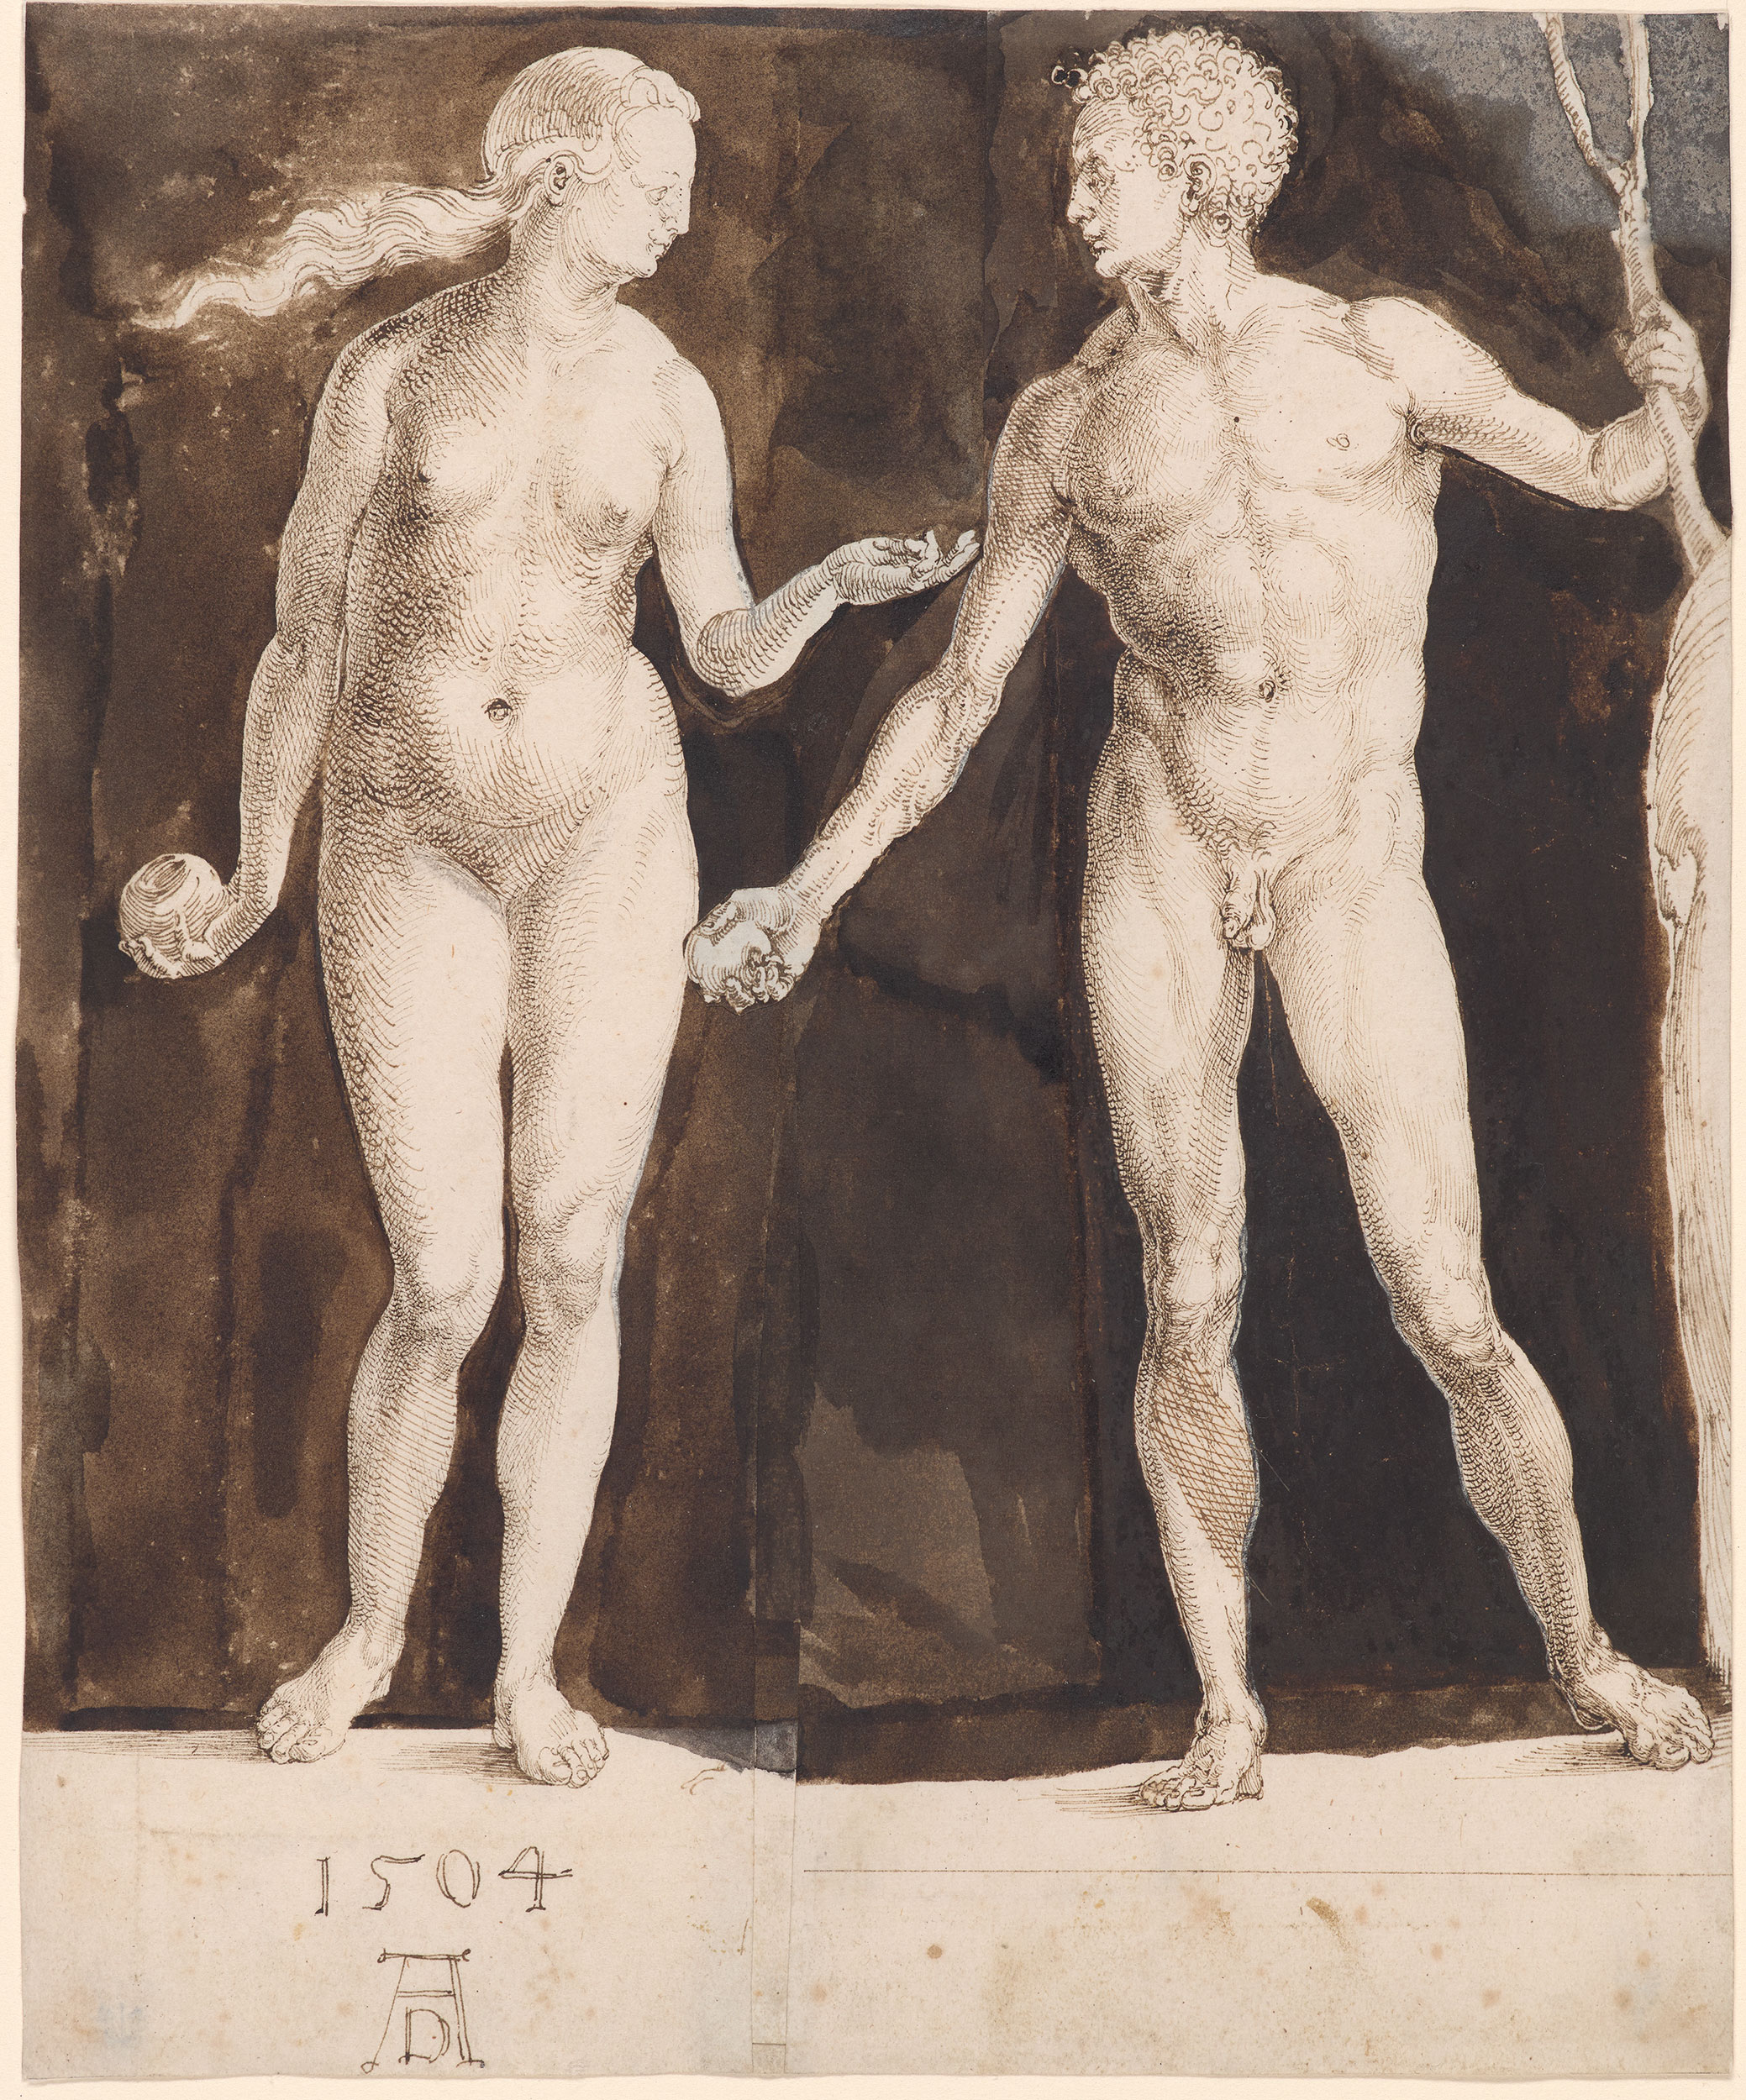 Adamo ed Eva by Albrecht Dürer - 1504 - 242 x 201 mm 